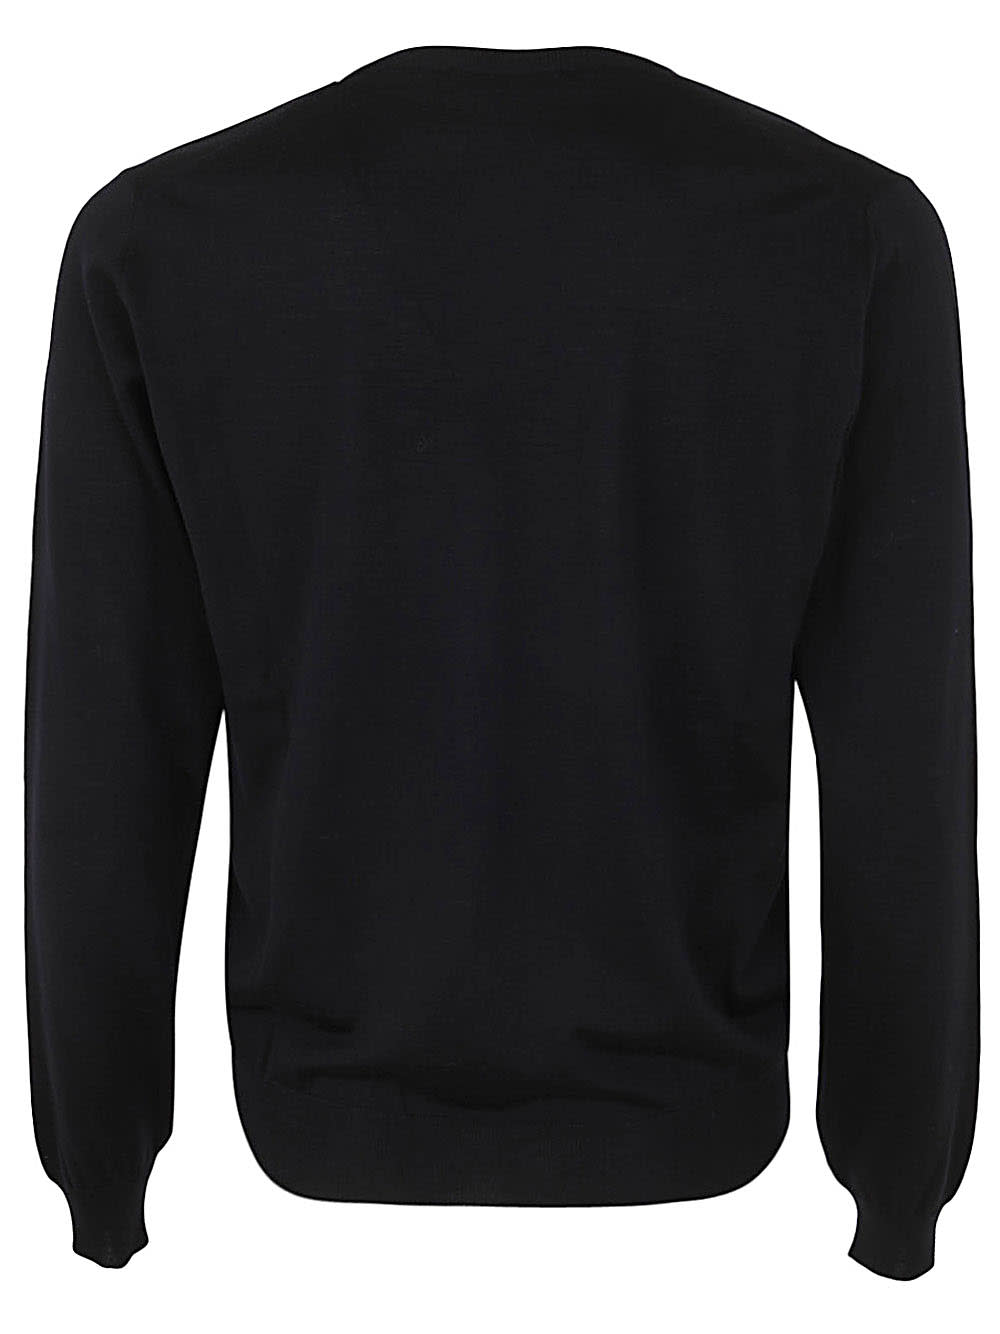 Shop Filippo De Laurentiis Royal Merino Long Sleeves V Neck Sweater In Steel